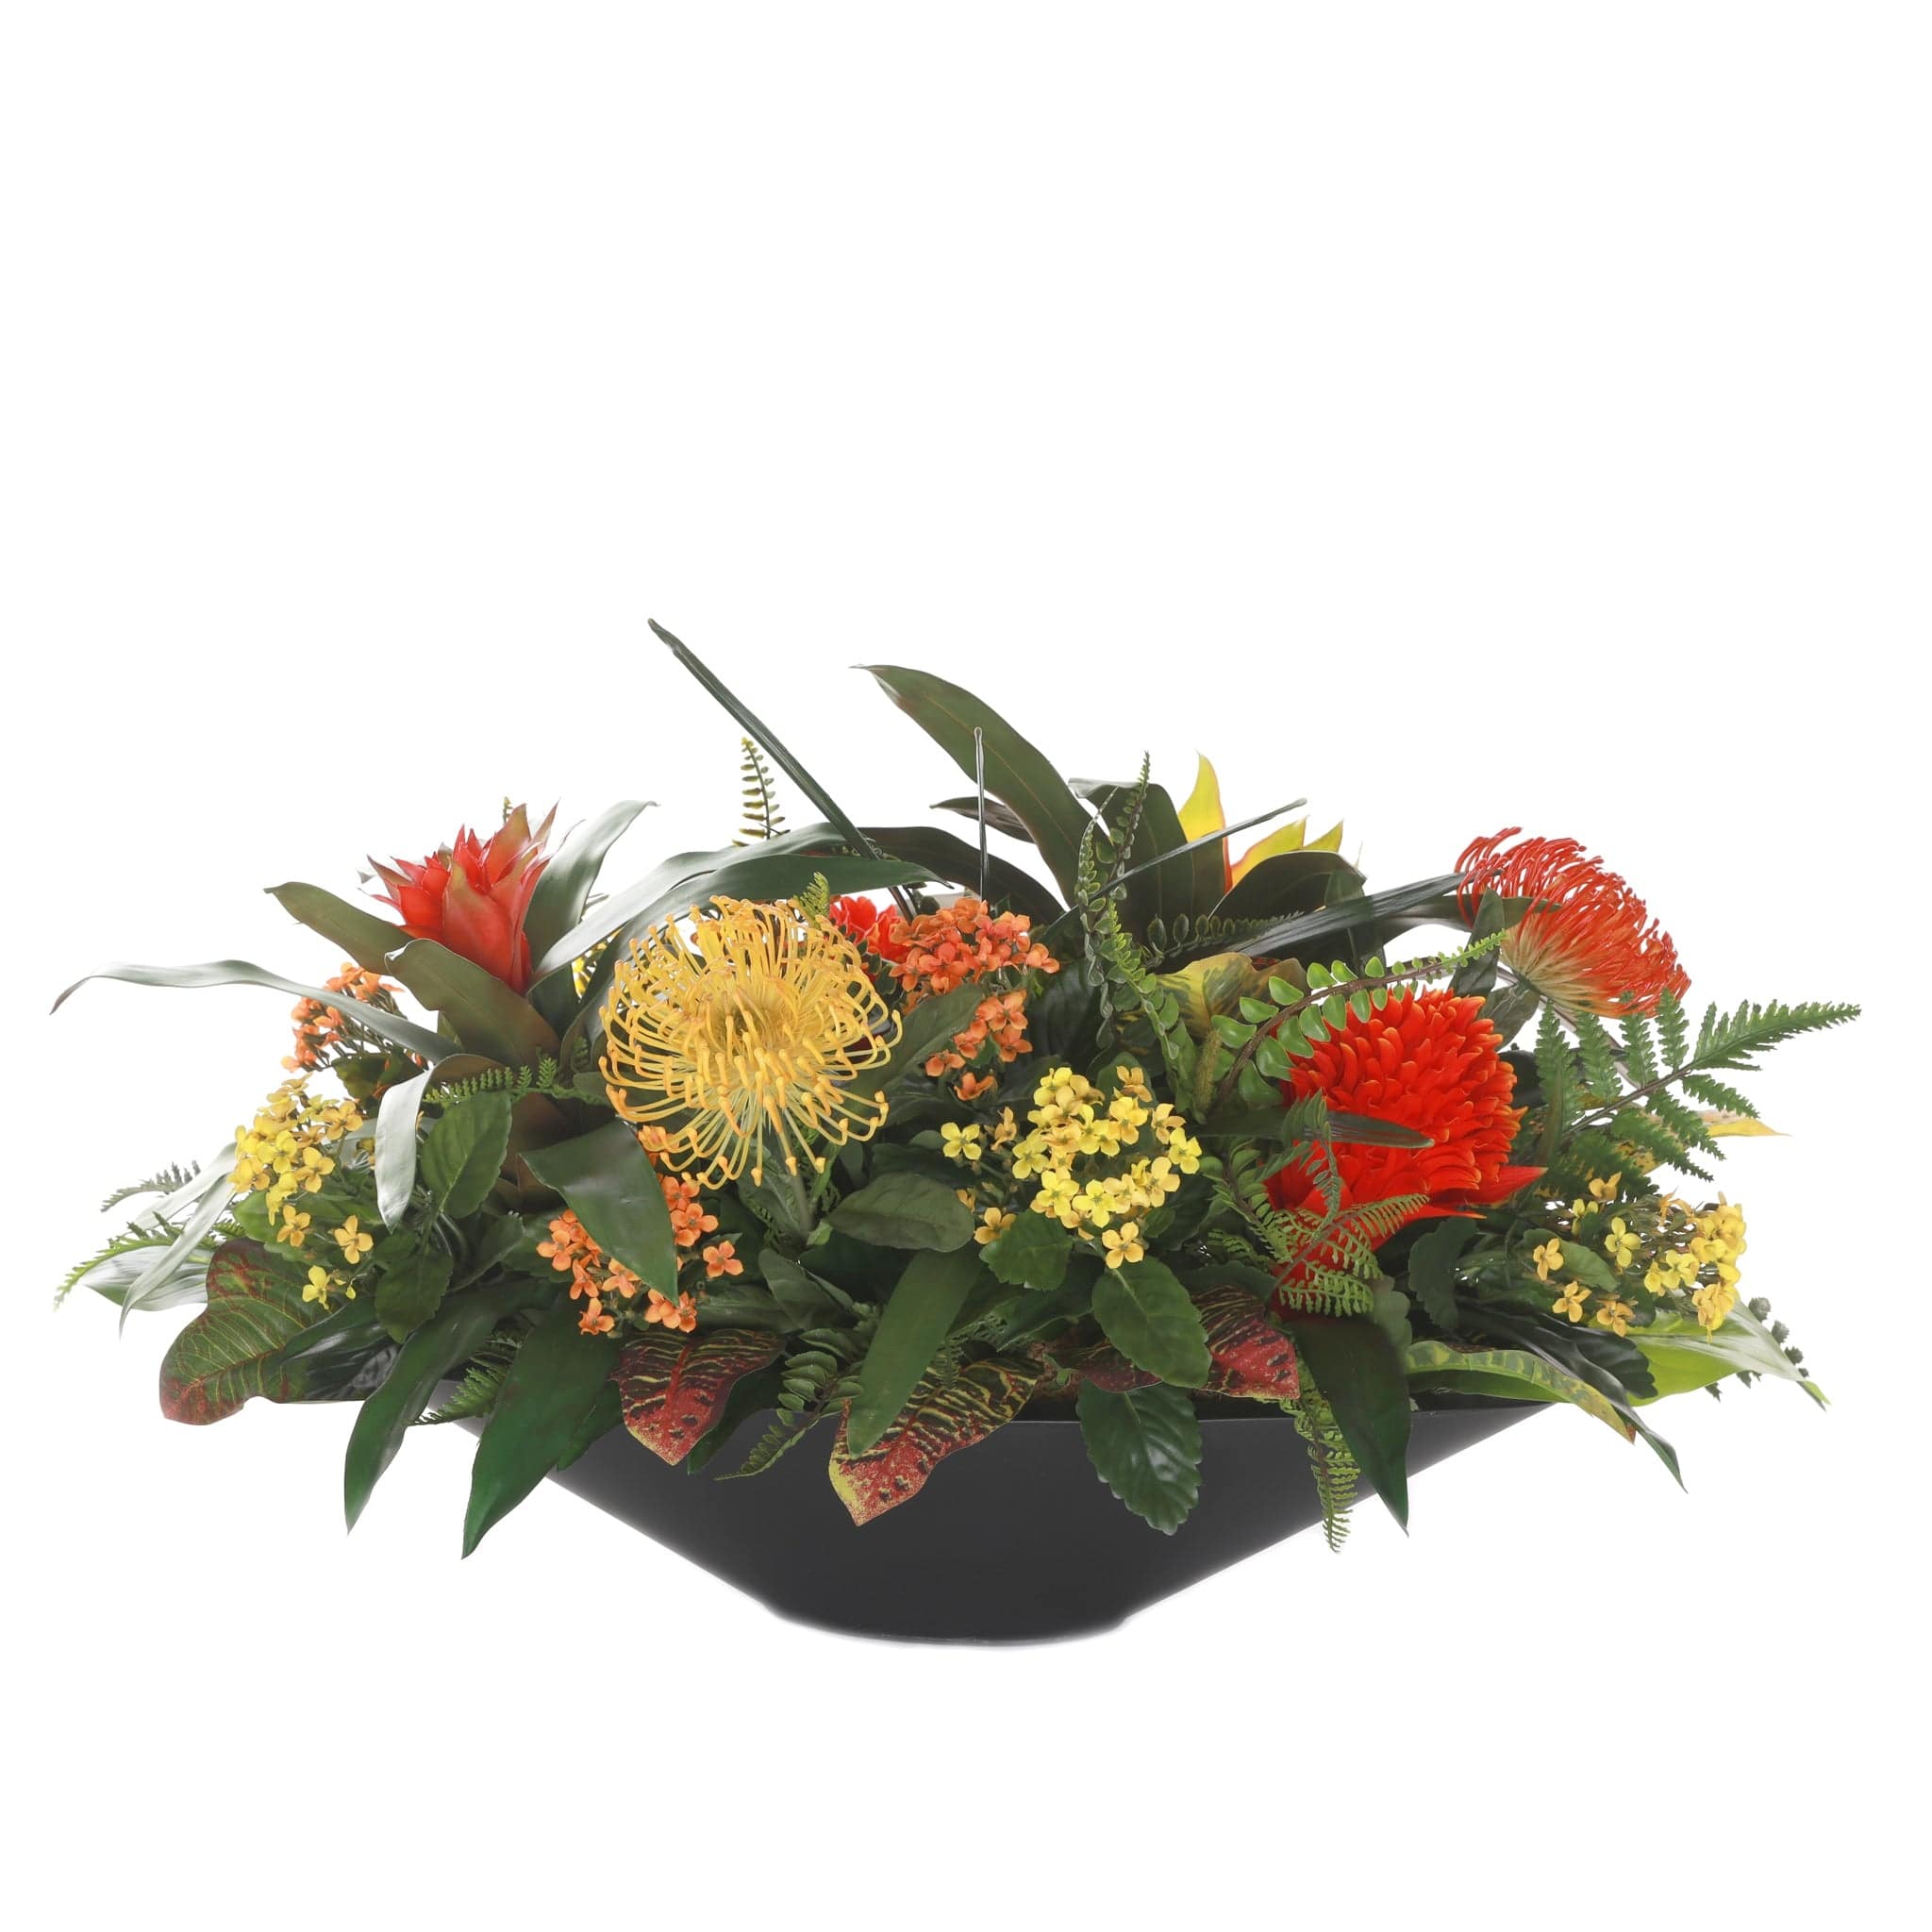 Bromeliad Tropical Flowers Arrangement In Oval Zinc Pot - Red,Yellow ...